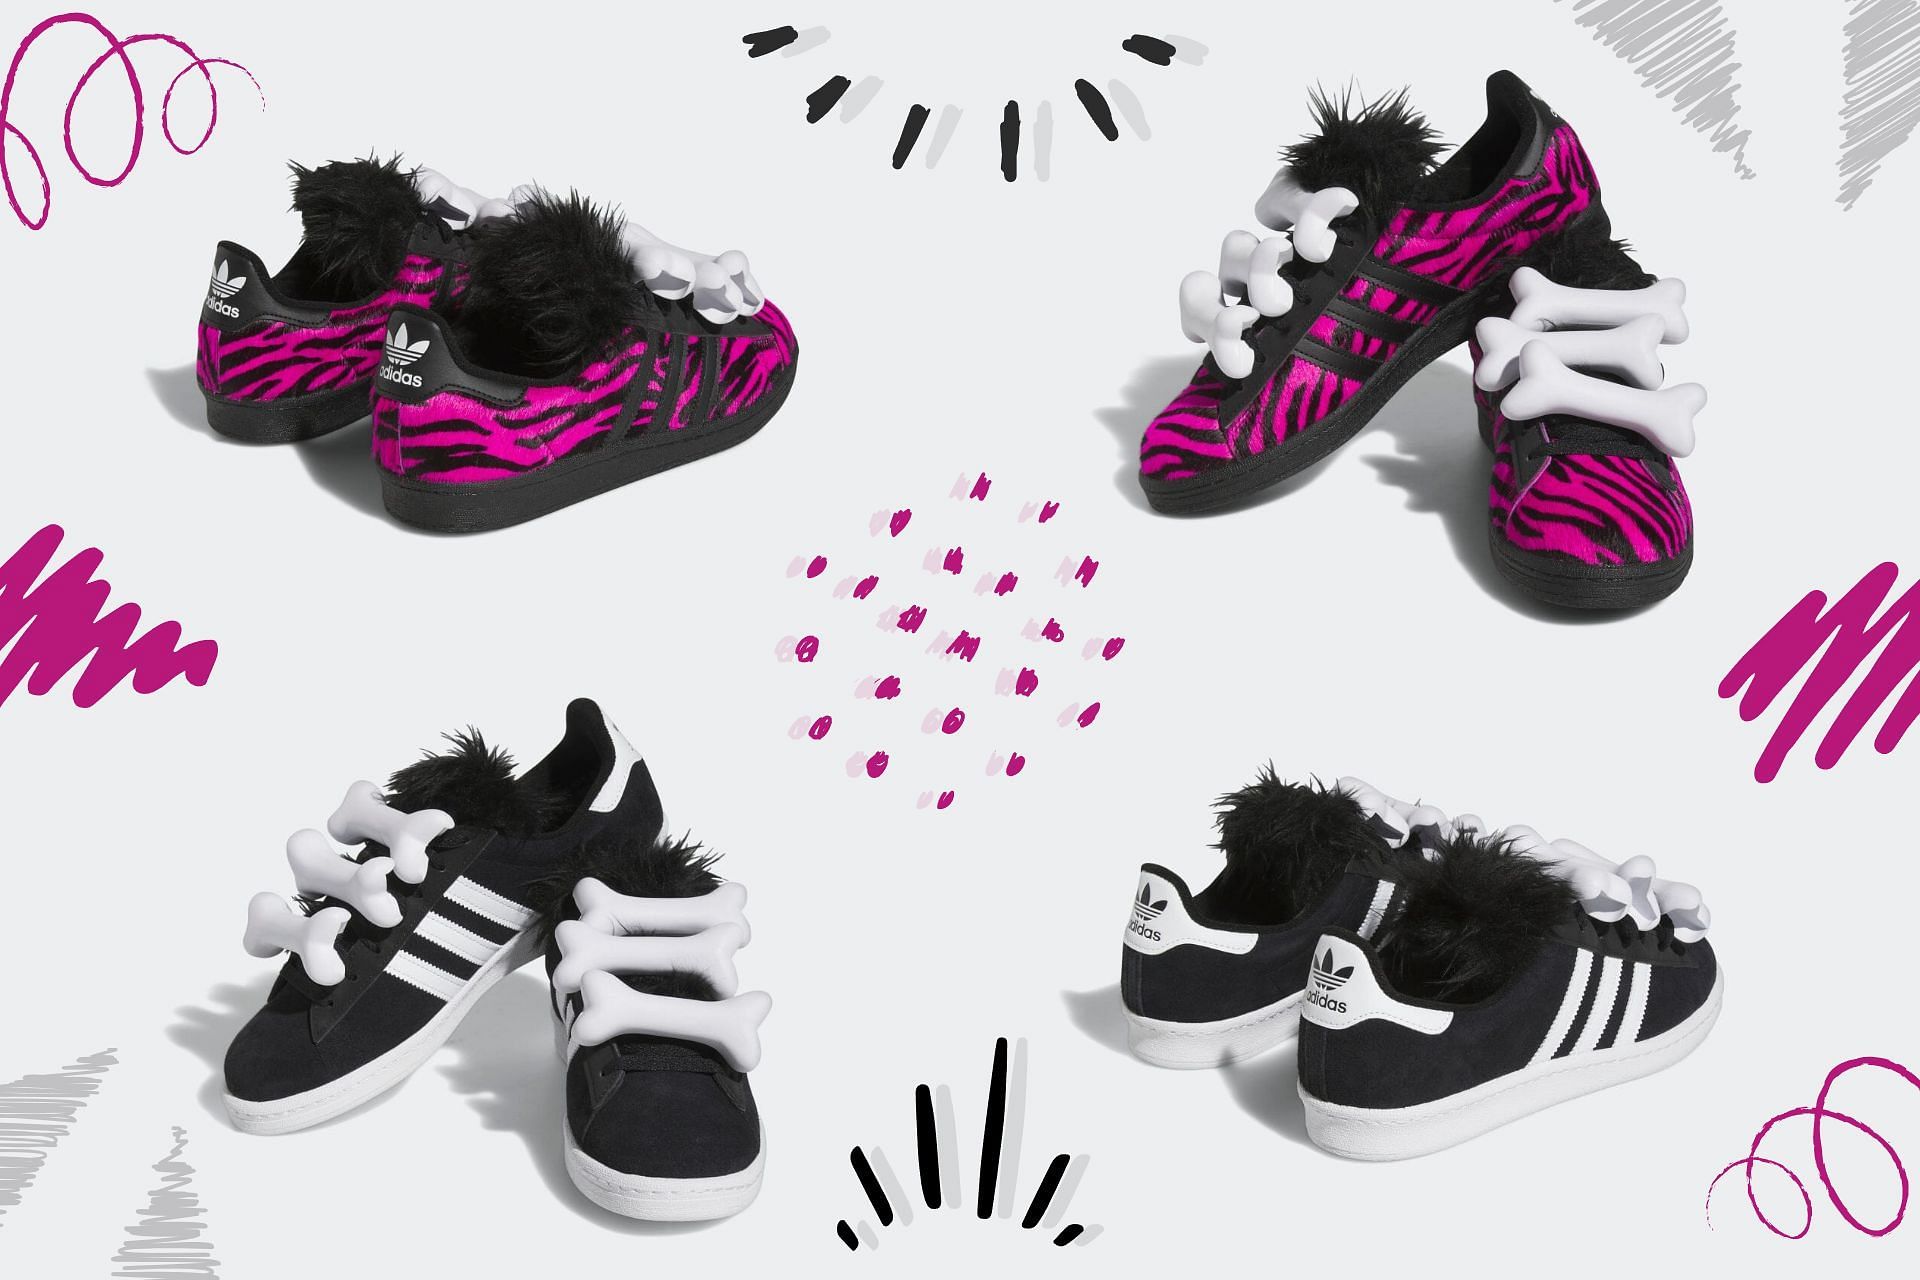 Jeremy Scott x Adidas Campus 80 Bones sneaker pack: Where to buy